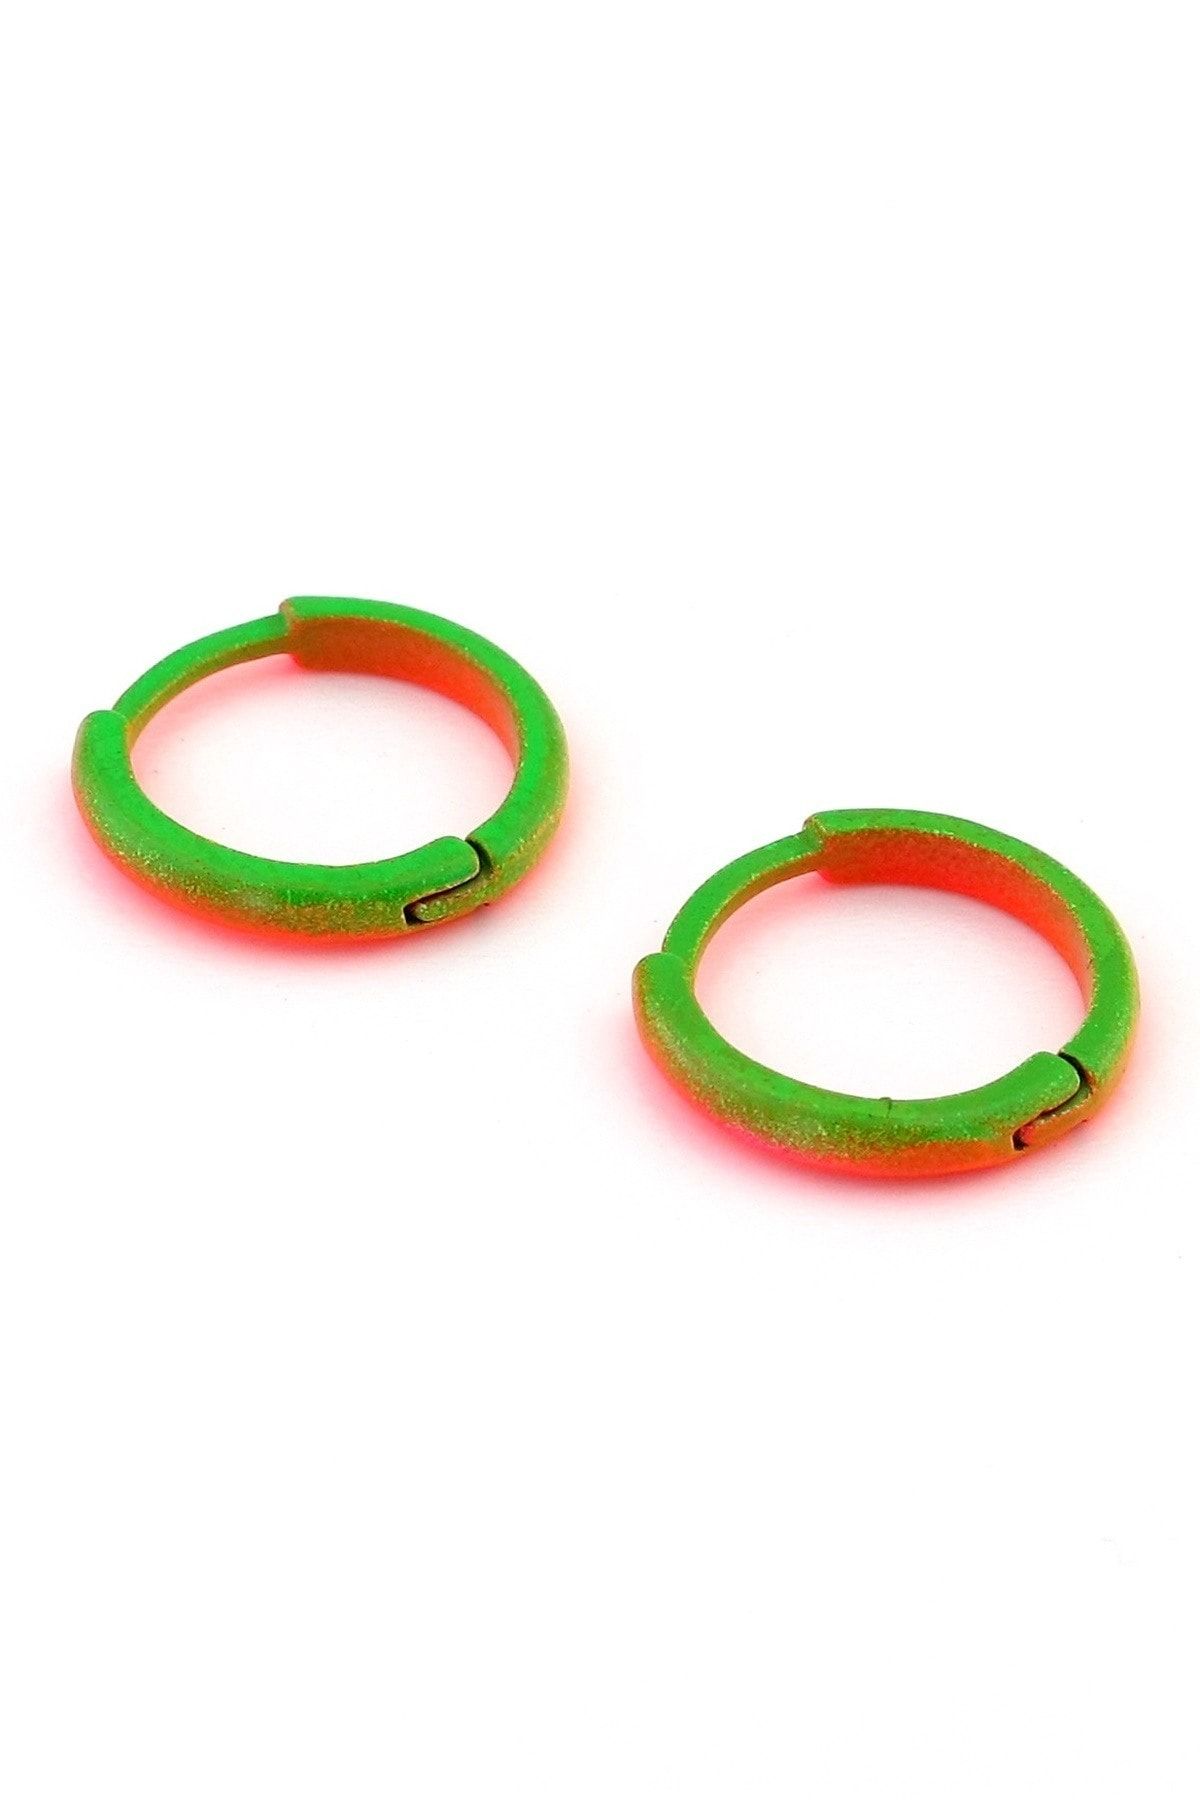 Solfera Turuncu Yeşil Neon Renkli Eğimli Model Halka Küpe E886